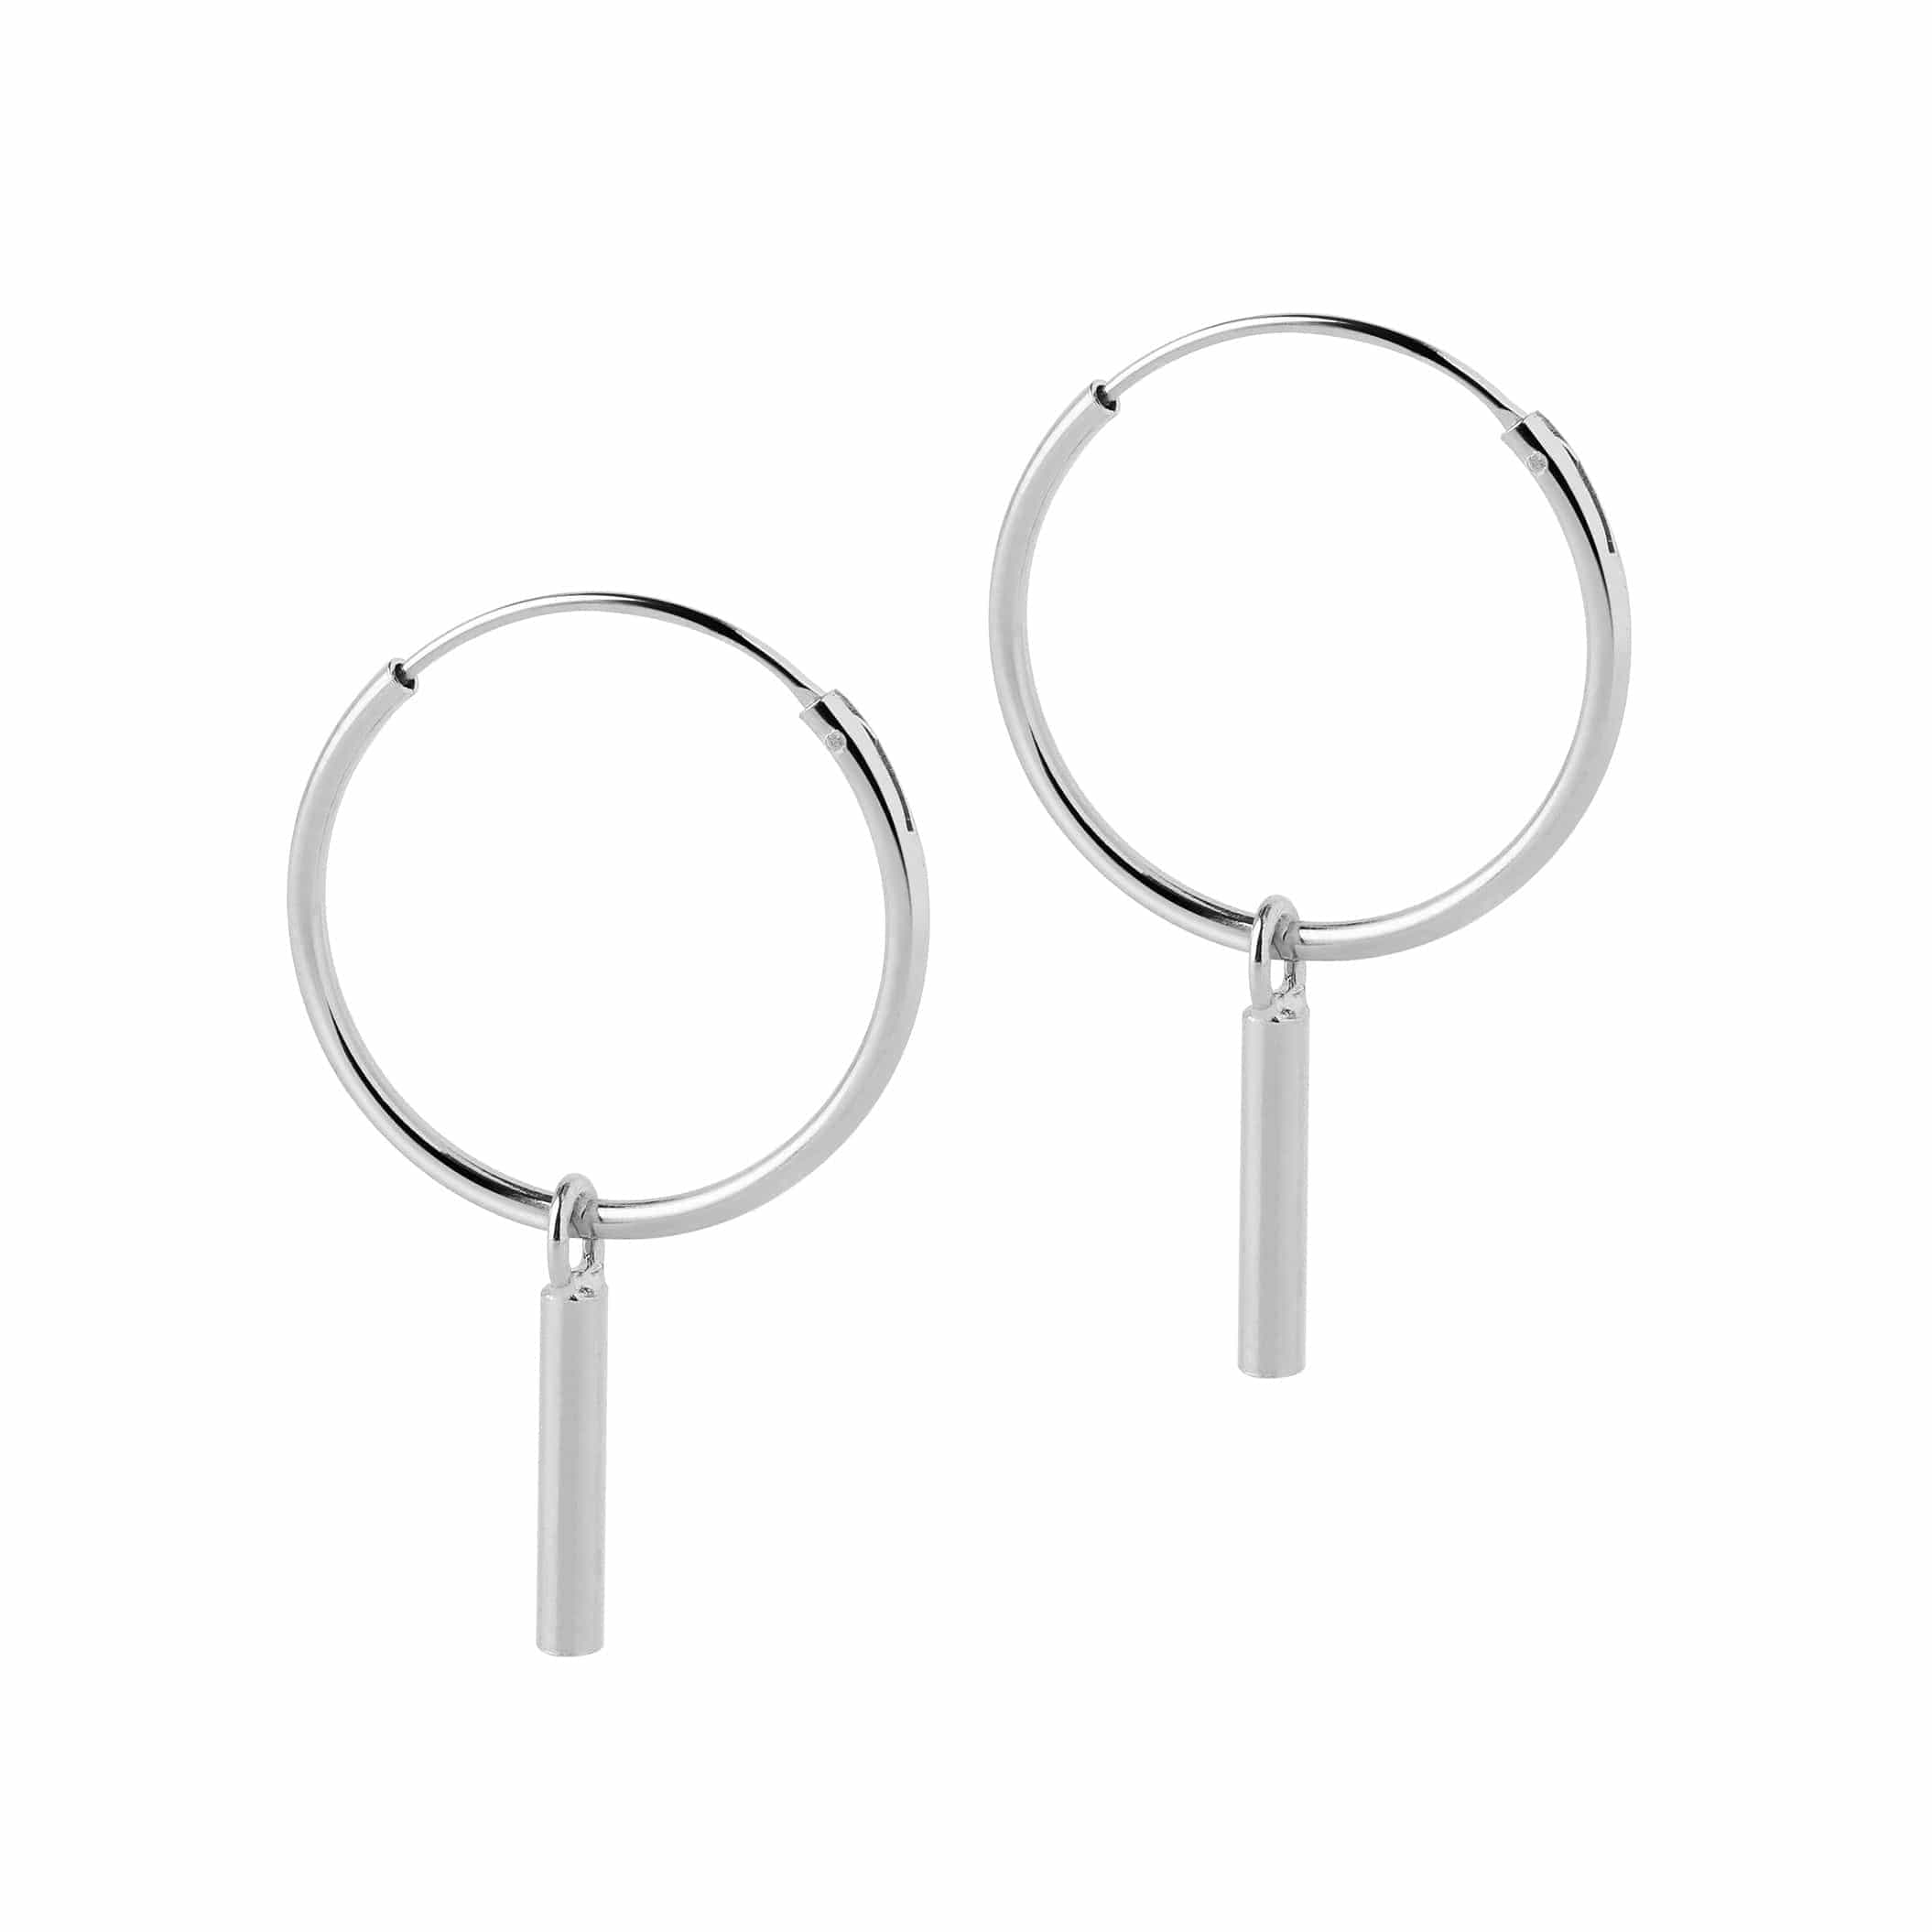 18mm silver hoop earrings with long rod